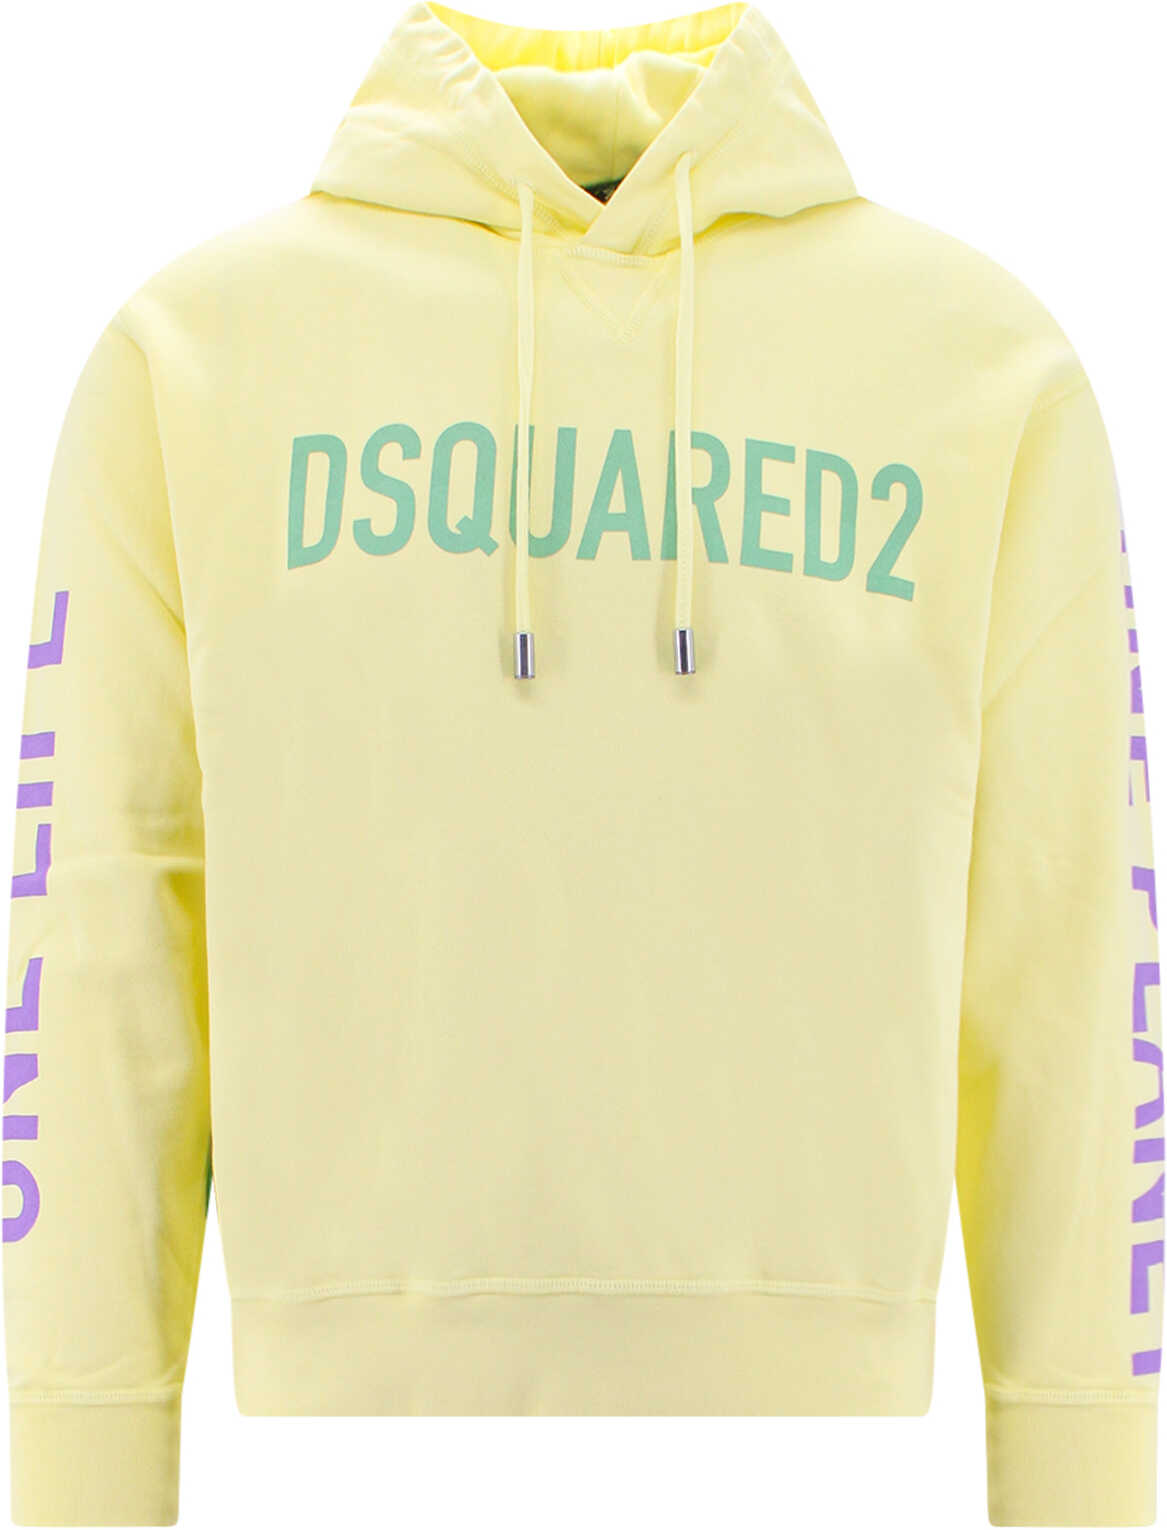 DSQUARED2 Sweatshirt Yellow